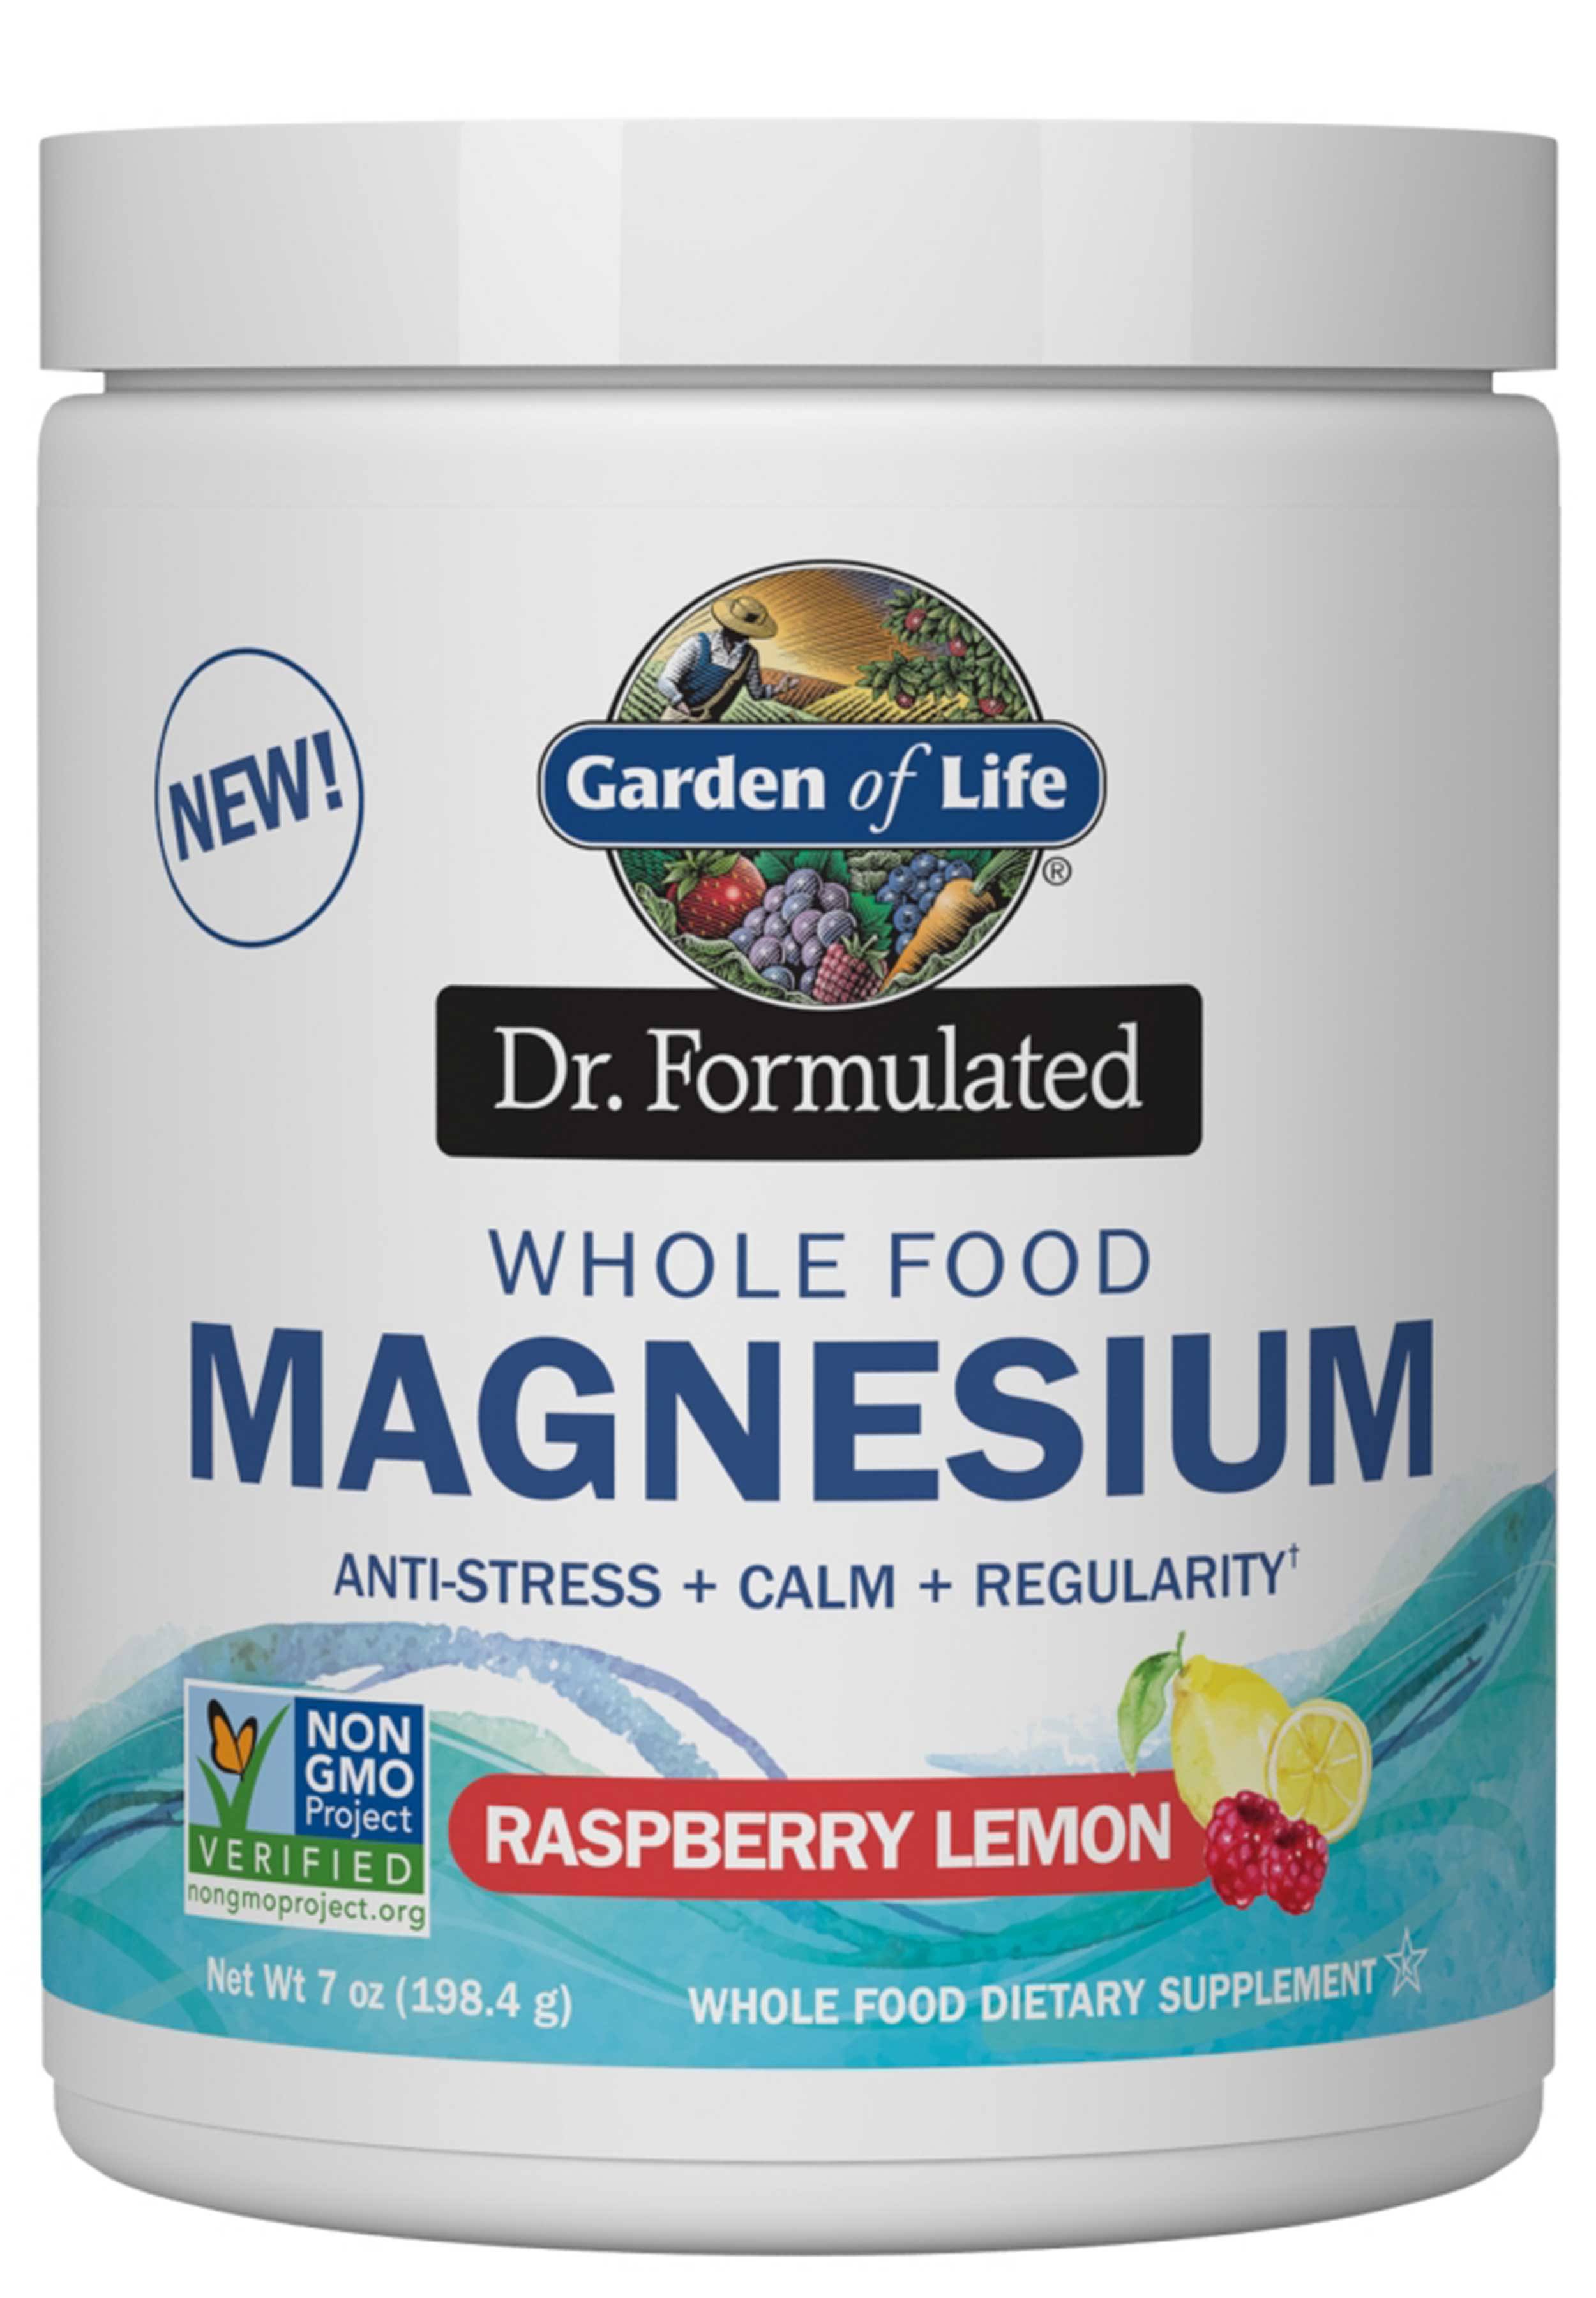 Garden of Life - Dr. Formulated Whole Food Magnesium, Raspberry Lemon